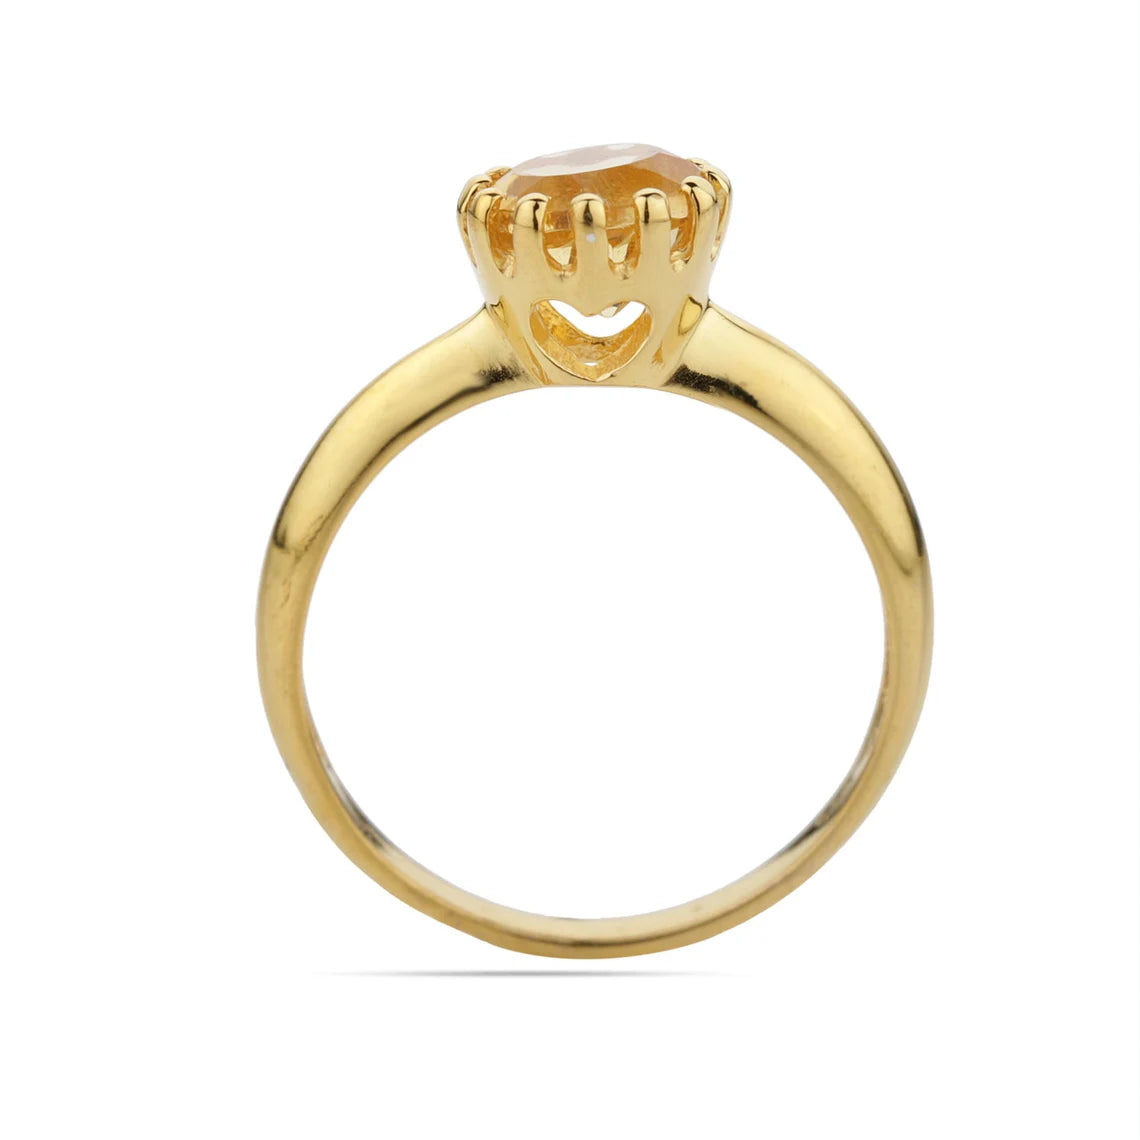 Round Citrine Ring, November Birthstone Ring, Citrine Gold Ring, Stacking Ring, Round Gemstone Ring, Natural Citrine Sterling Silver Ring